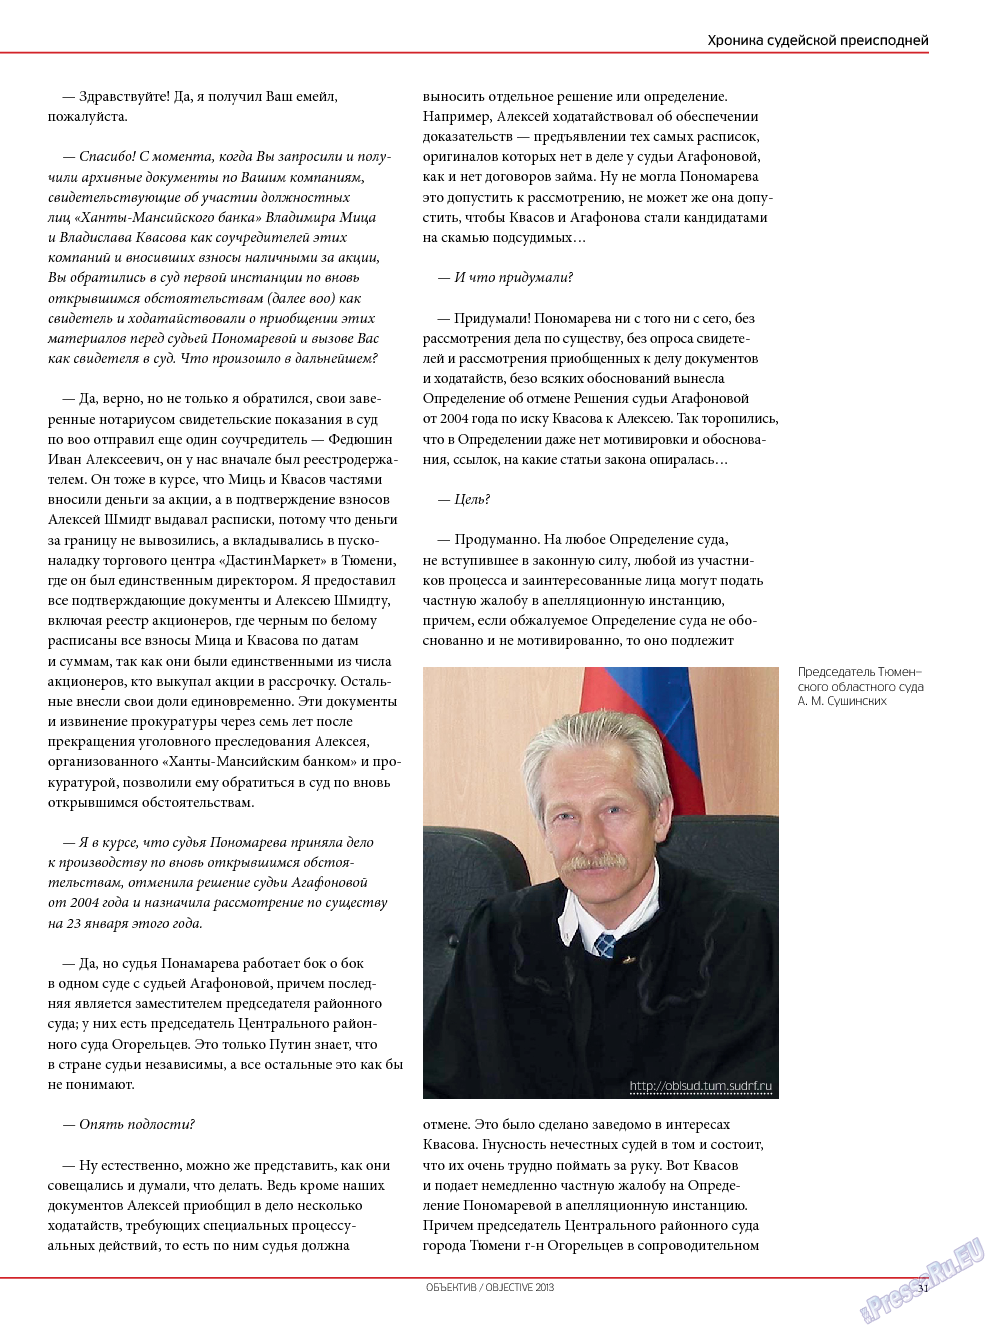 Объектив EU, журнал. 2013 №2 стр.33